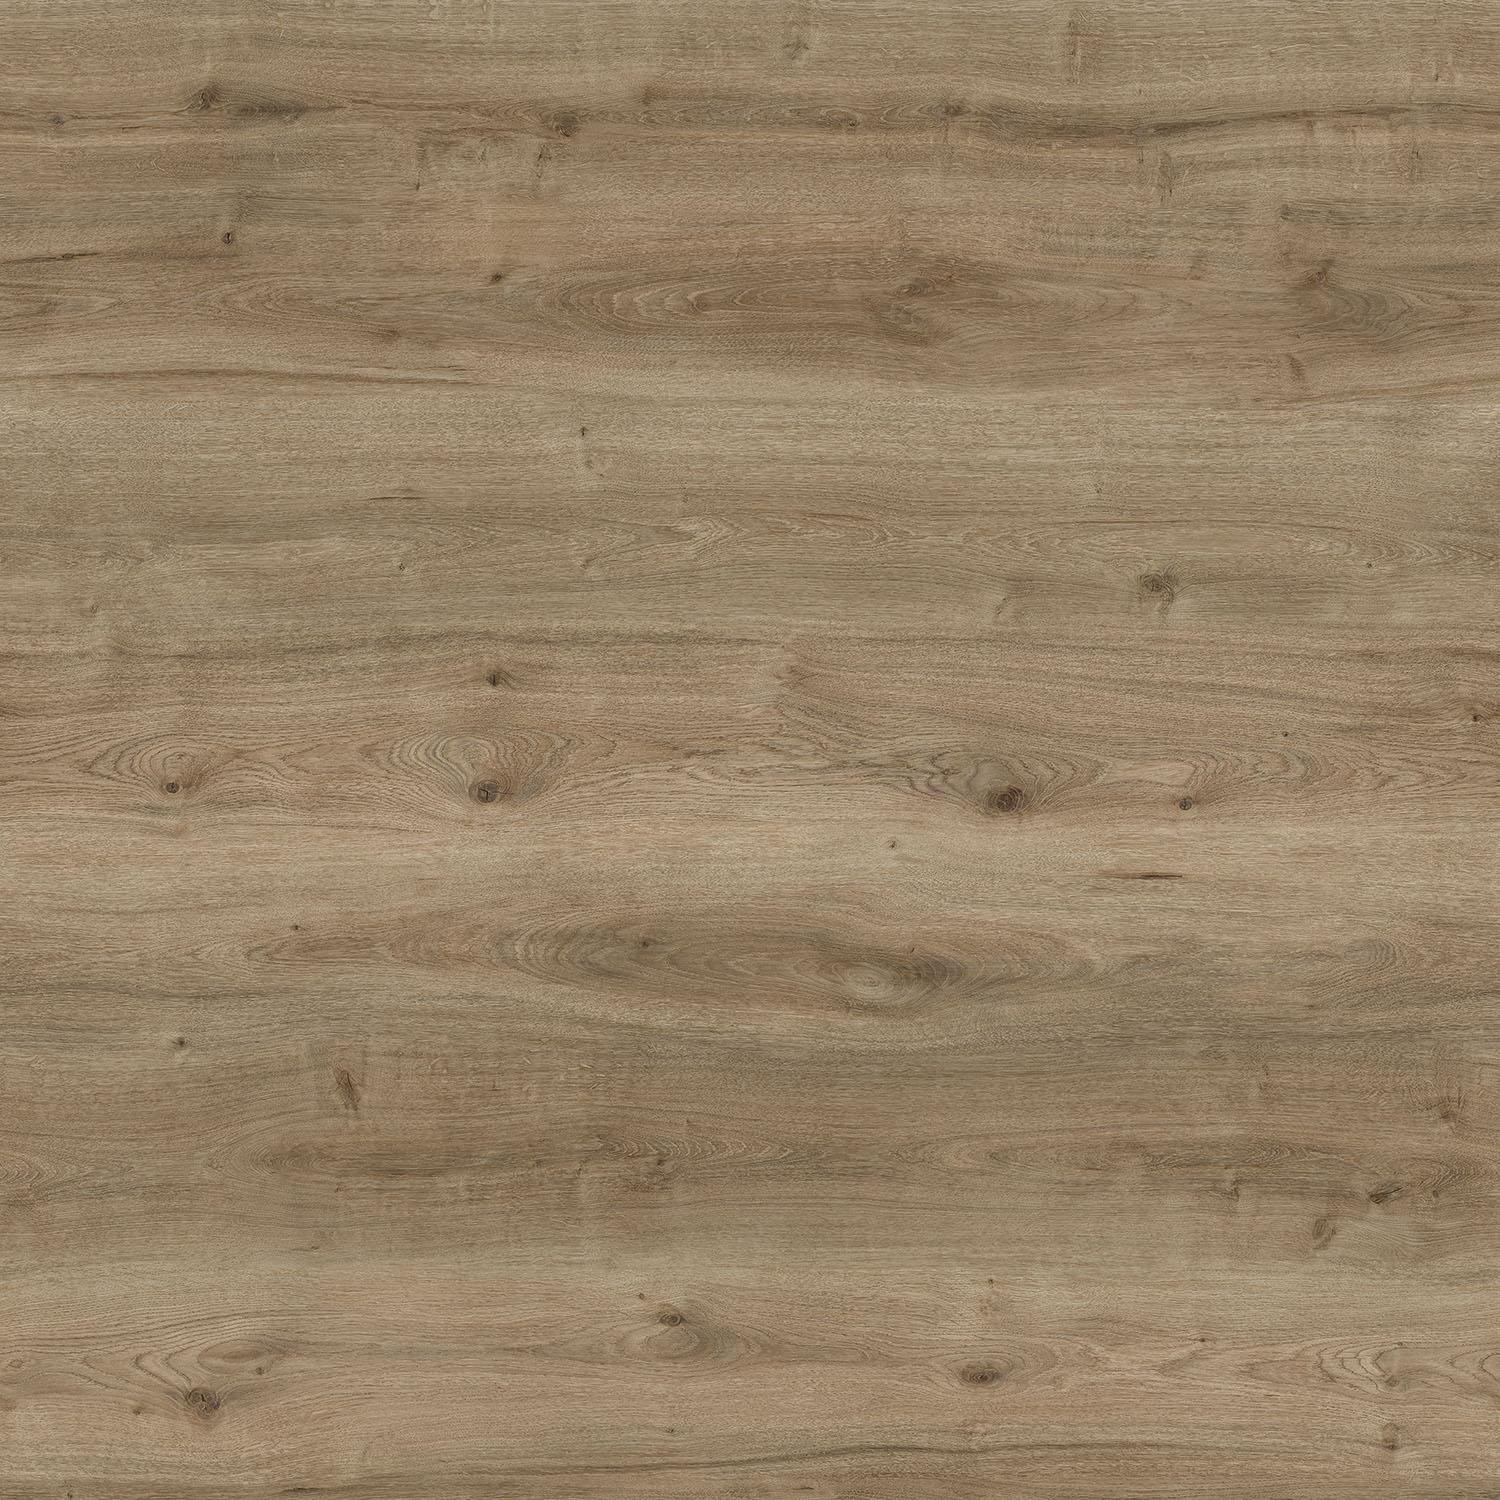 WISE Waterproof Cork Flooring - Wood Look (FIELD OAK)